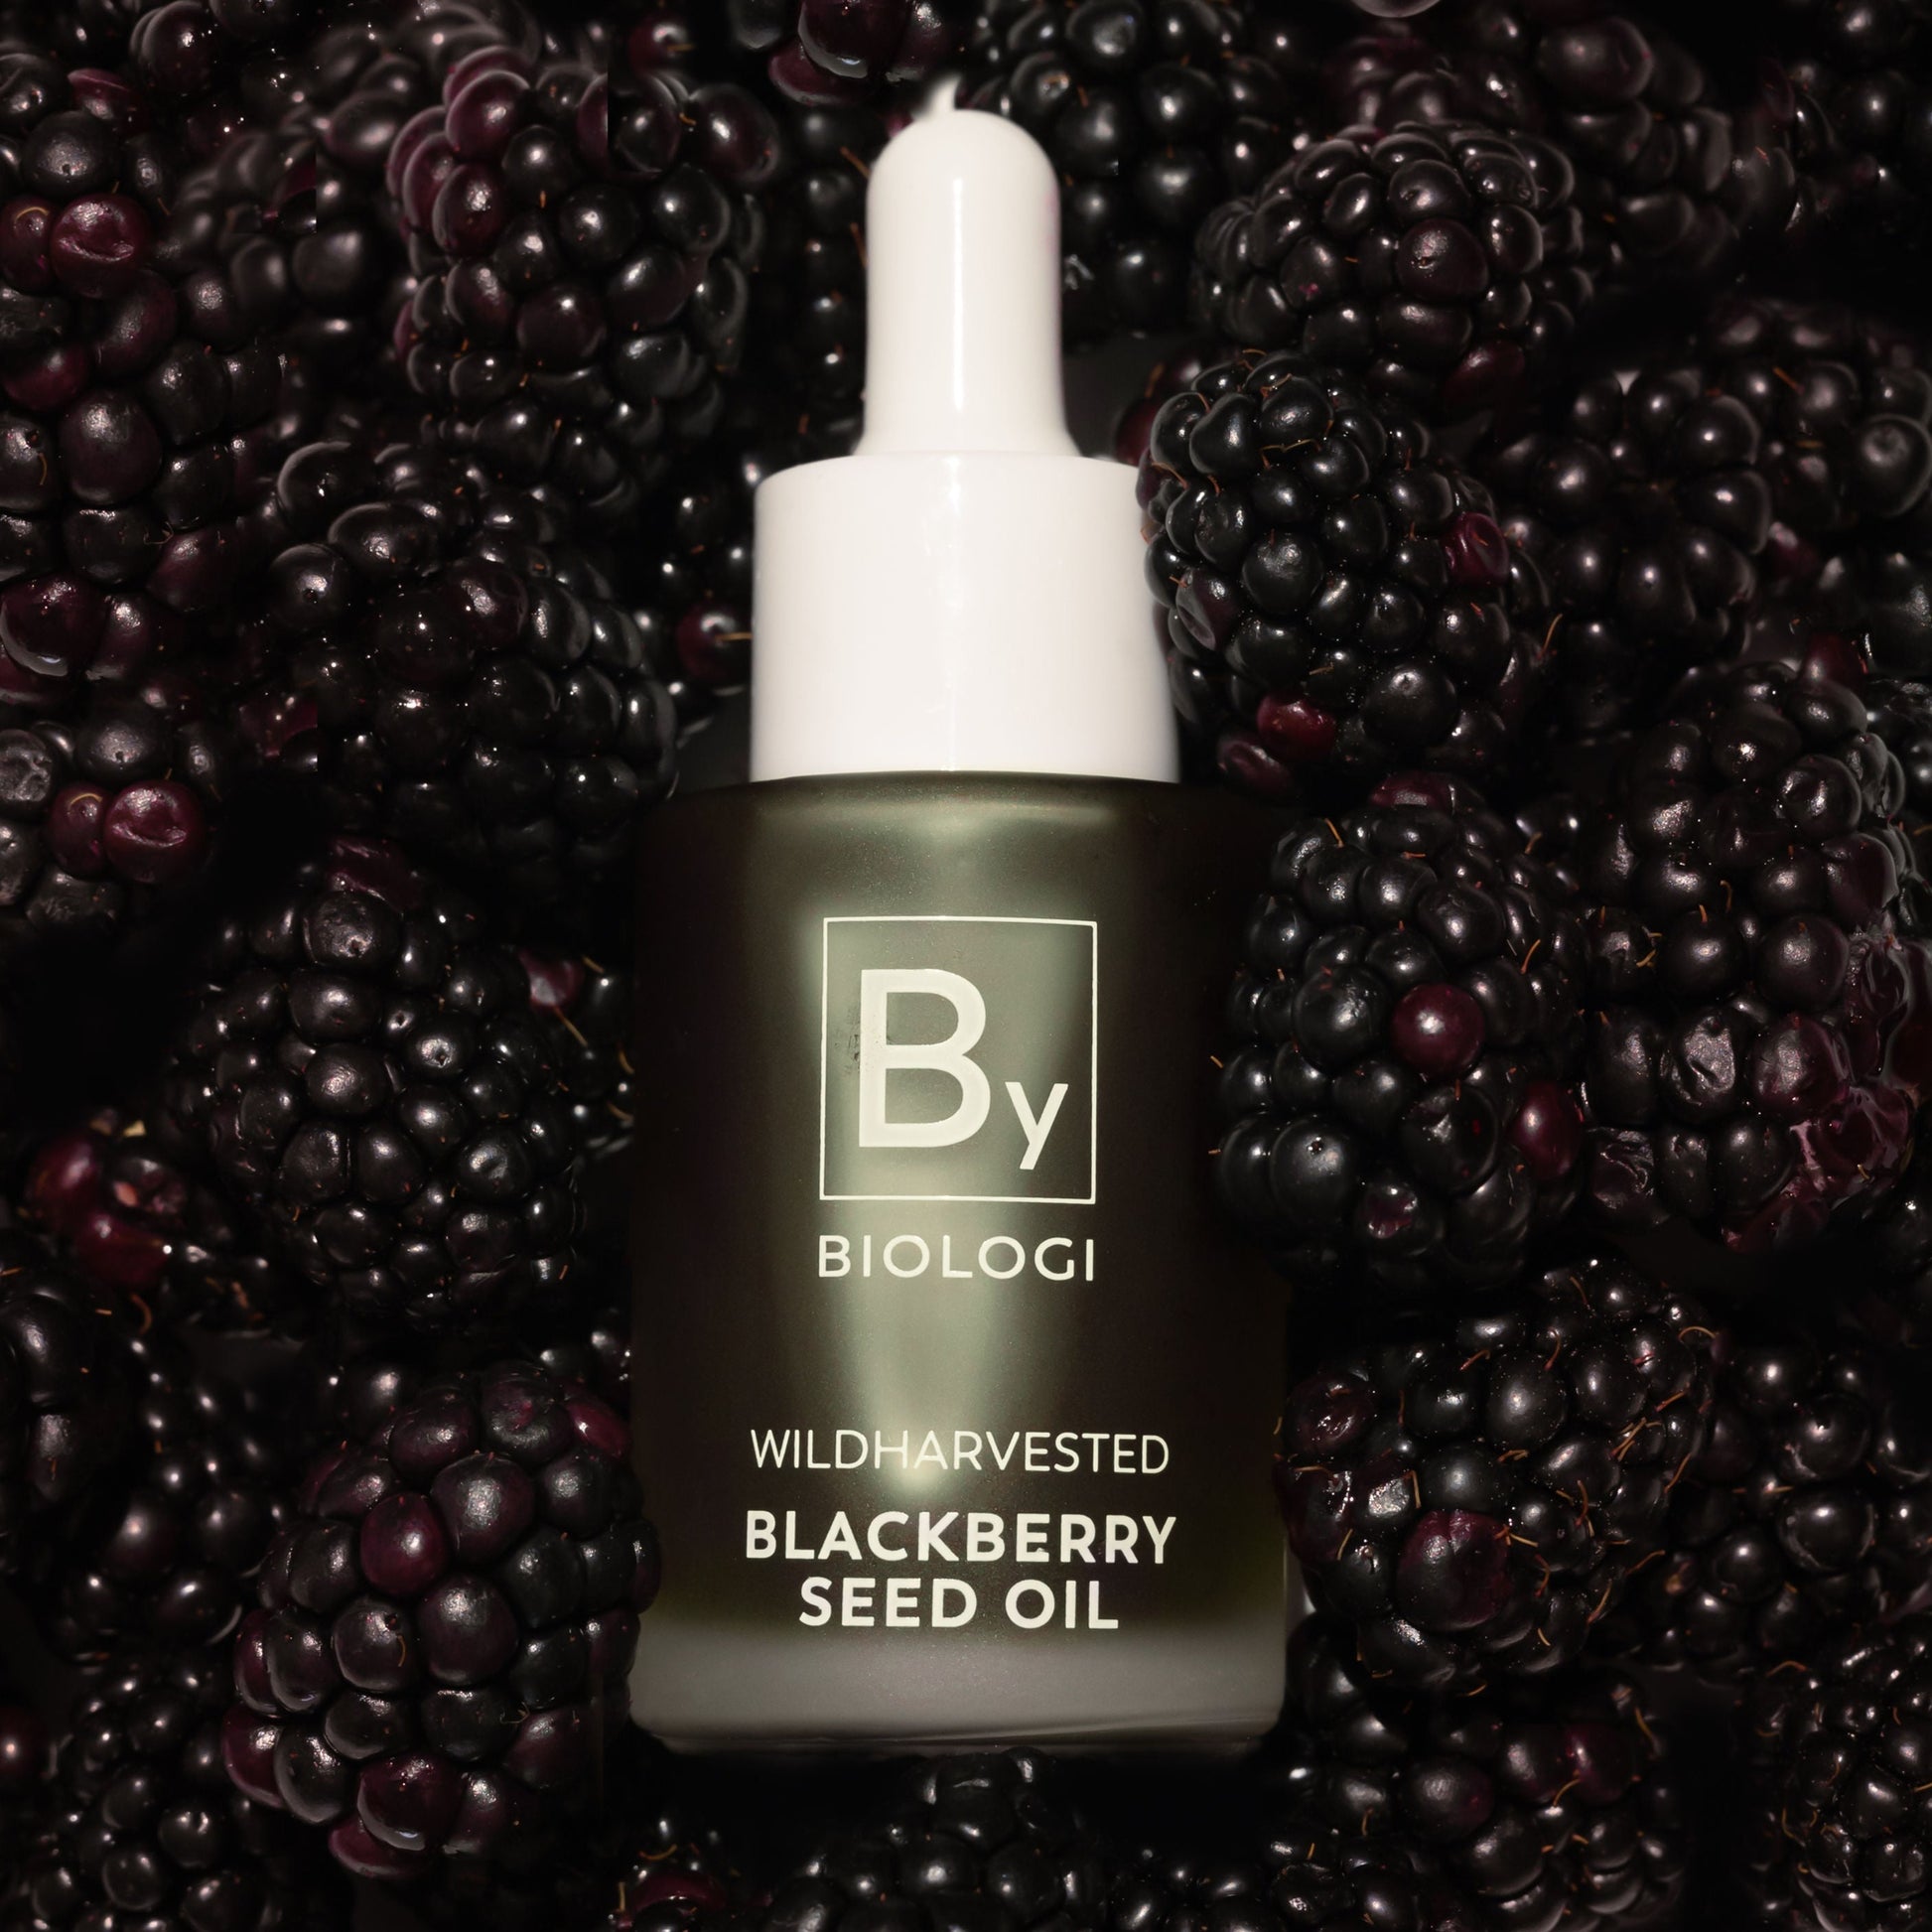 Biologi By Blackberry Seed Oil with blackberry fruit- Margot Body